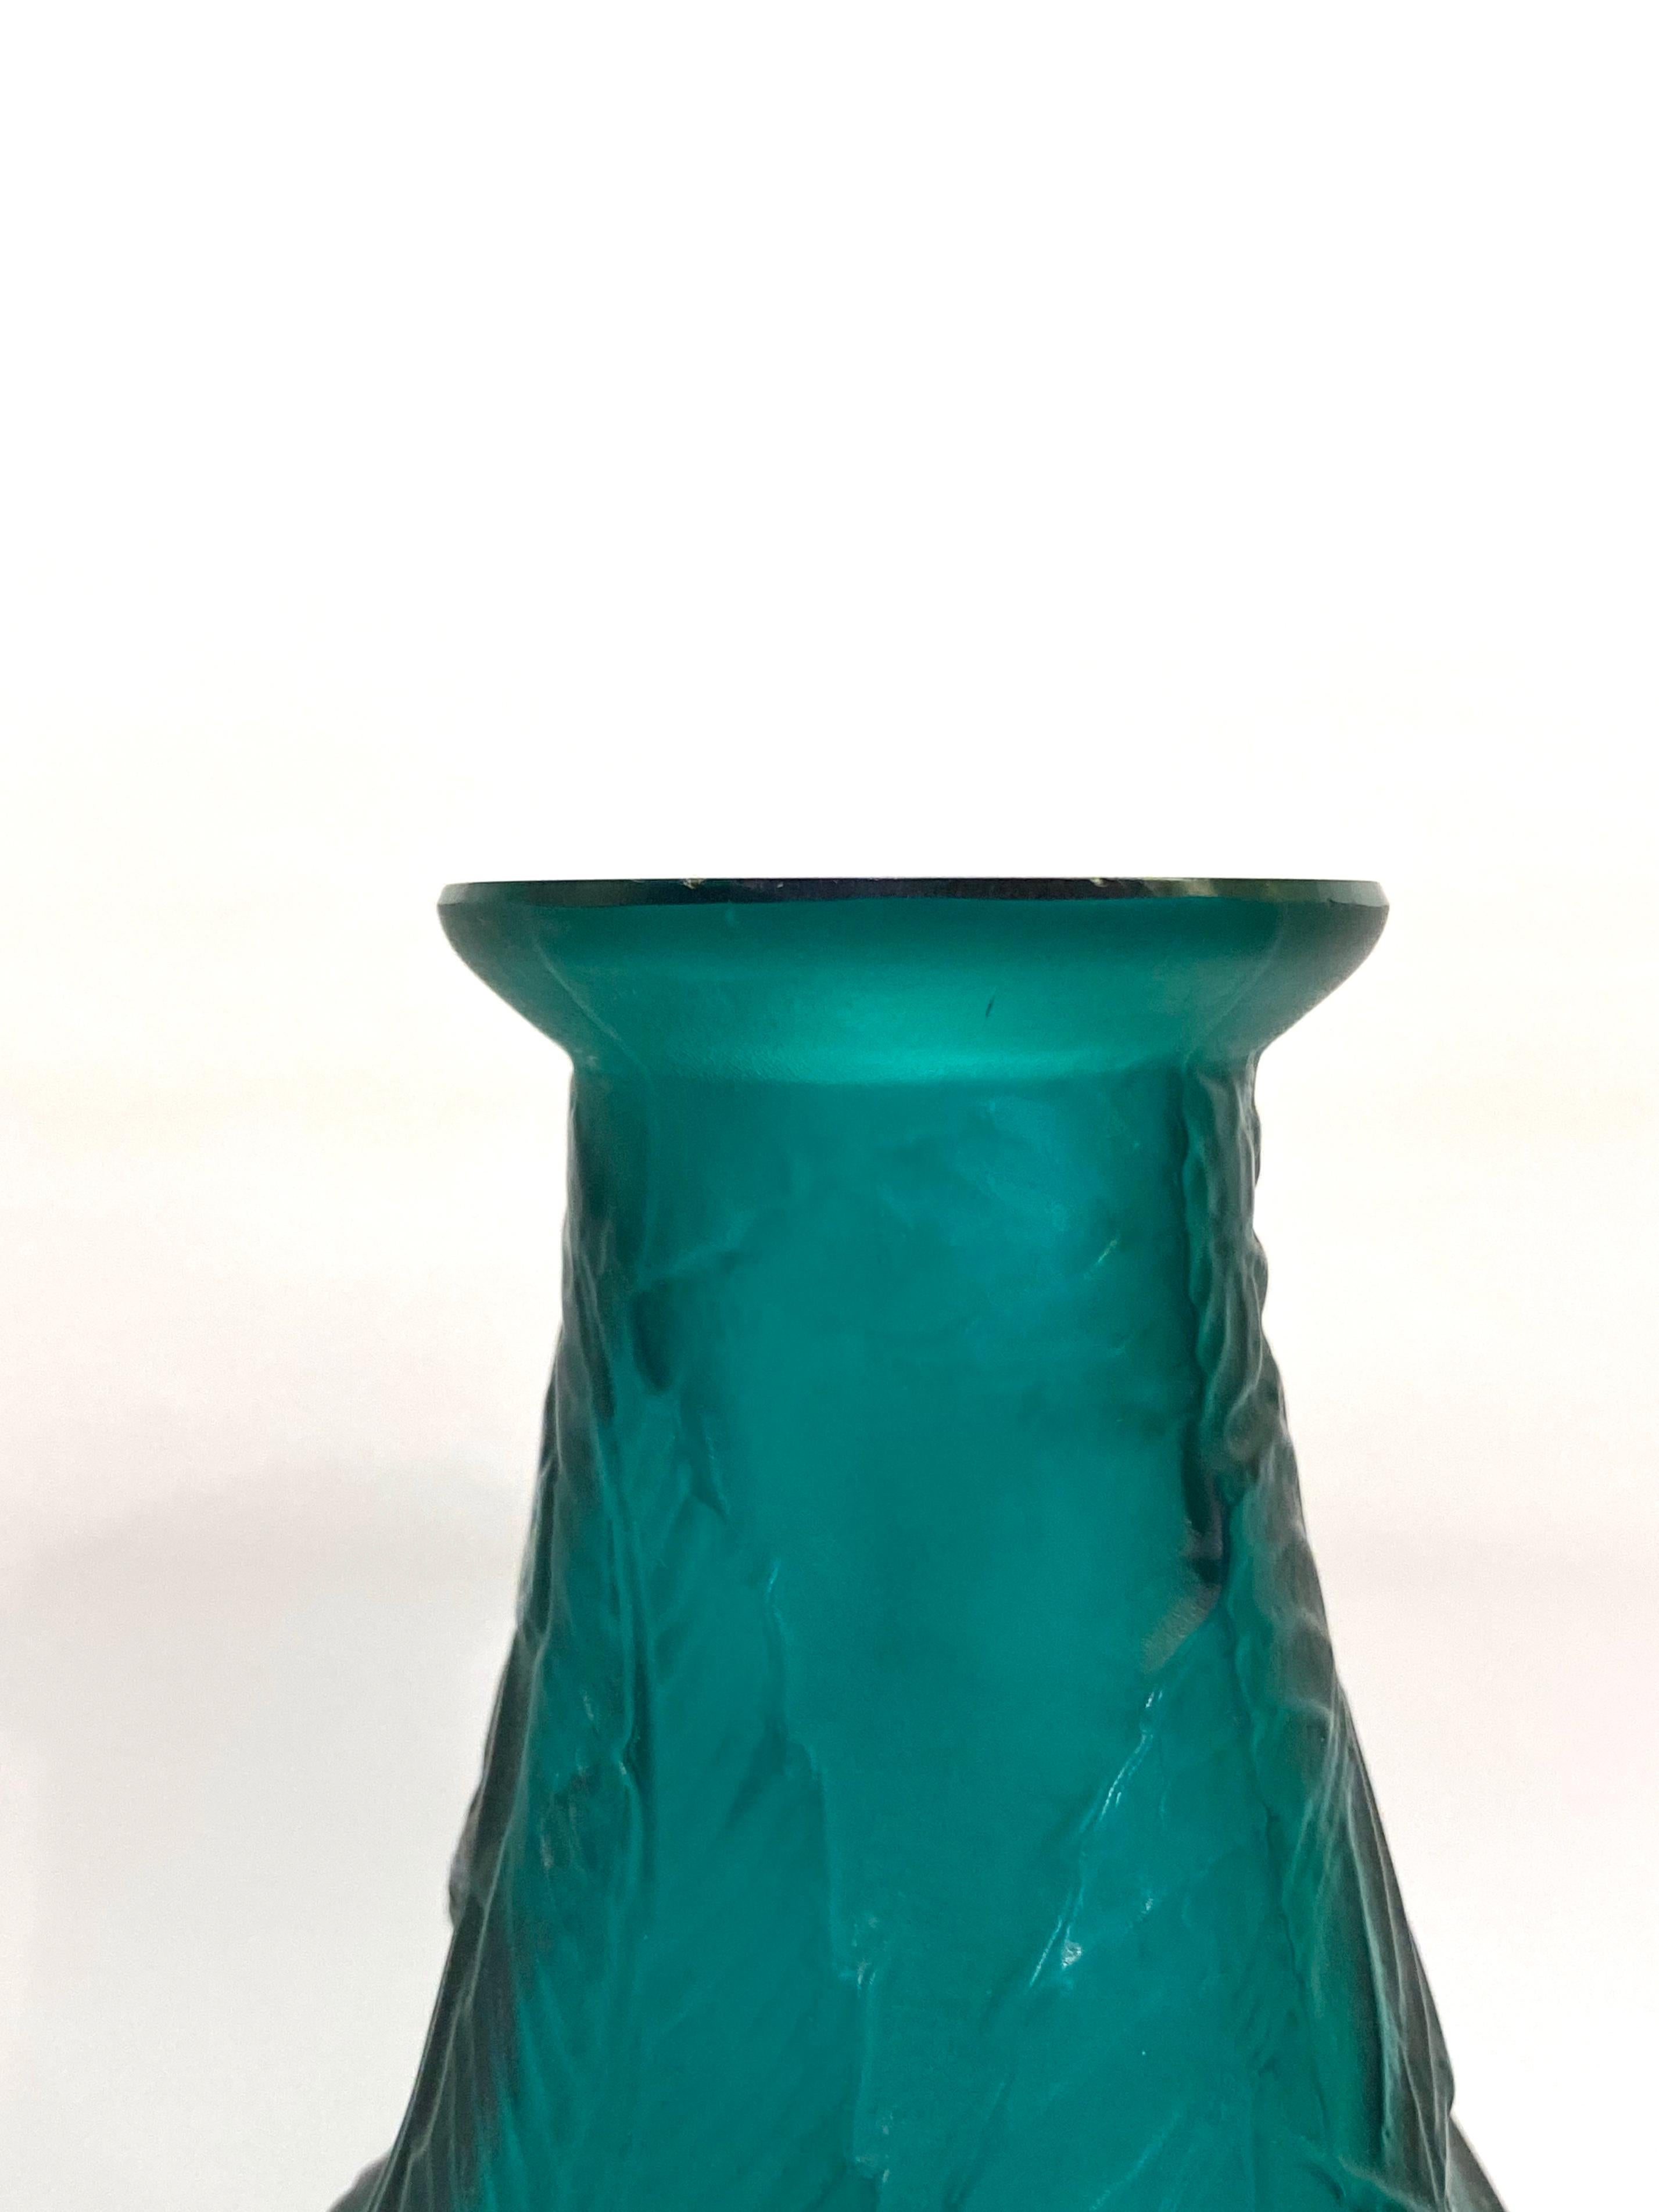 Molded 1923 René Lalique Sauges Vase in Tale Green Glass Sage Leaves